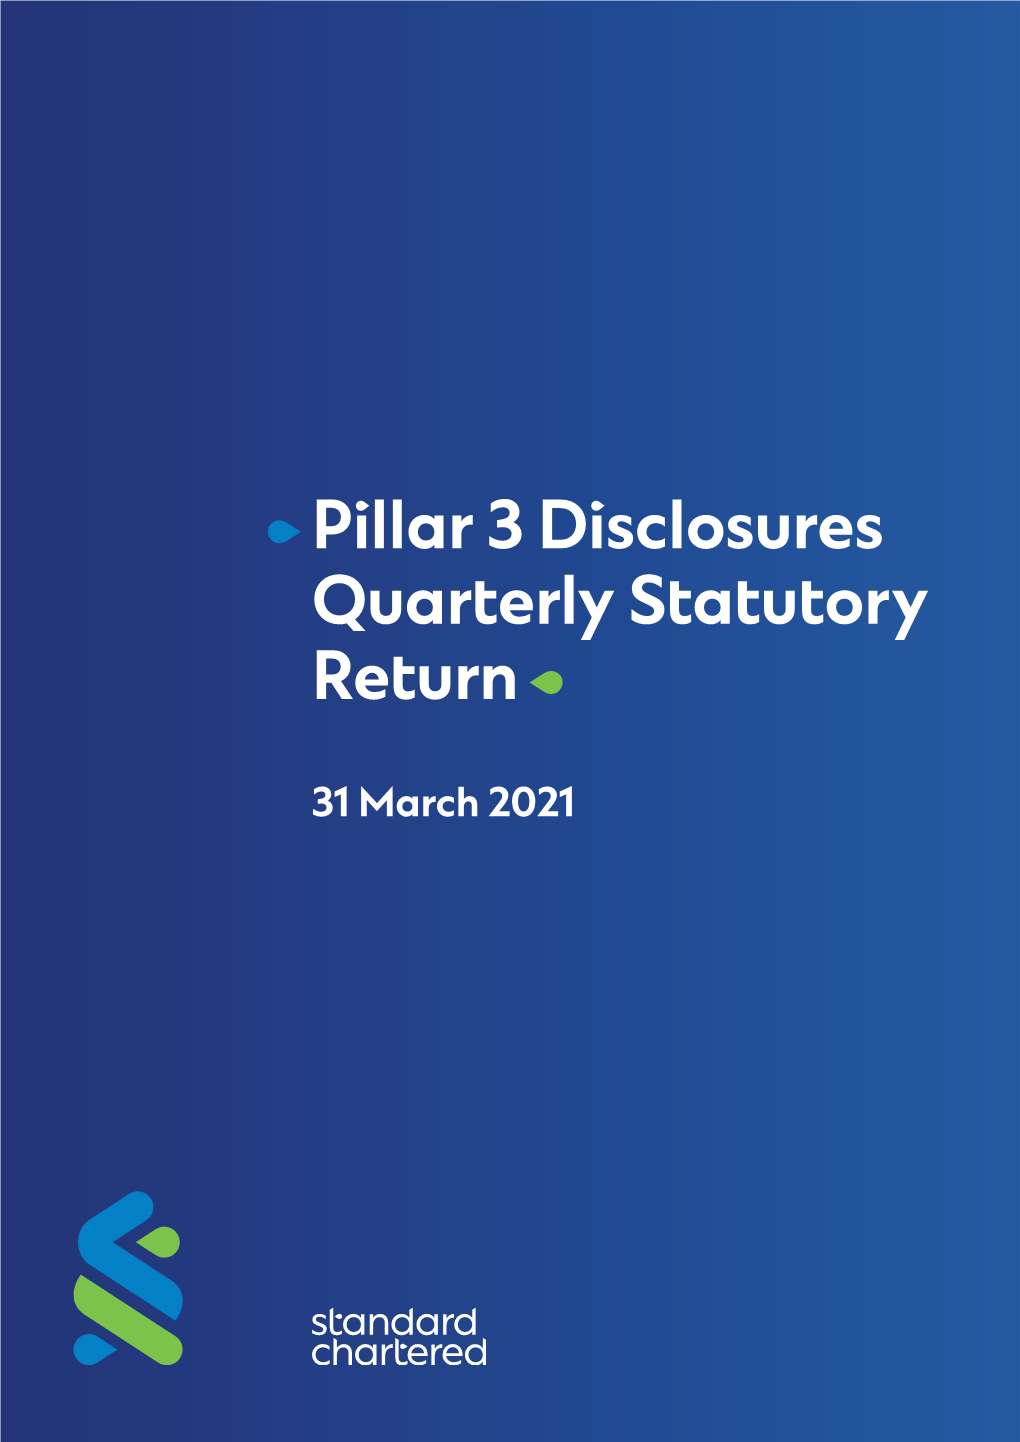 [[Pillar 3 Disclosures Quarterly Statutory Return]]